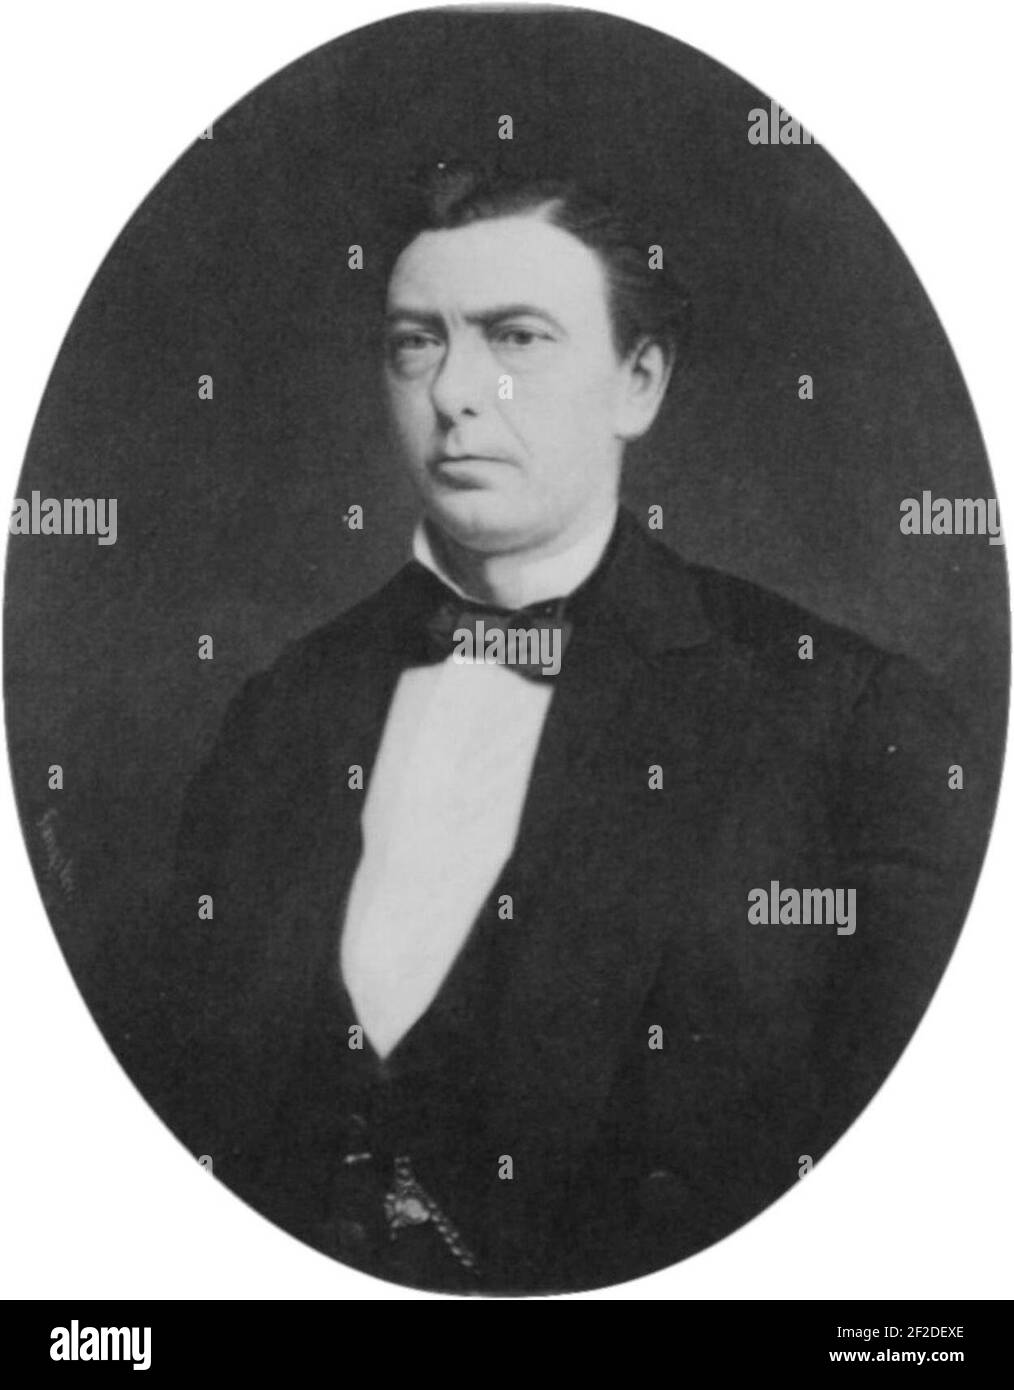 Portrait of Johannes Hermanus Albregt by Hendrik Alexander Sangster Stadsschouwburg Amsterdam A05. Stock Photo